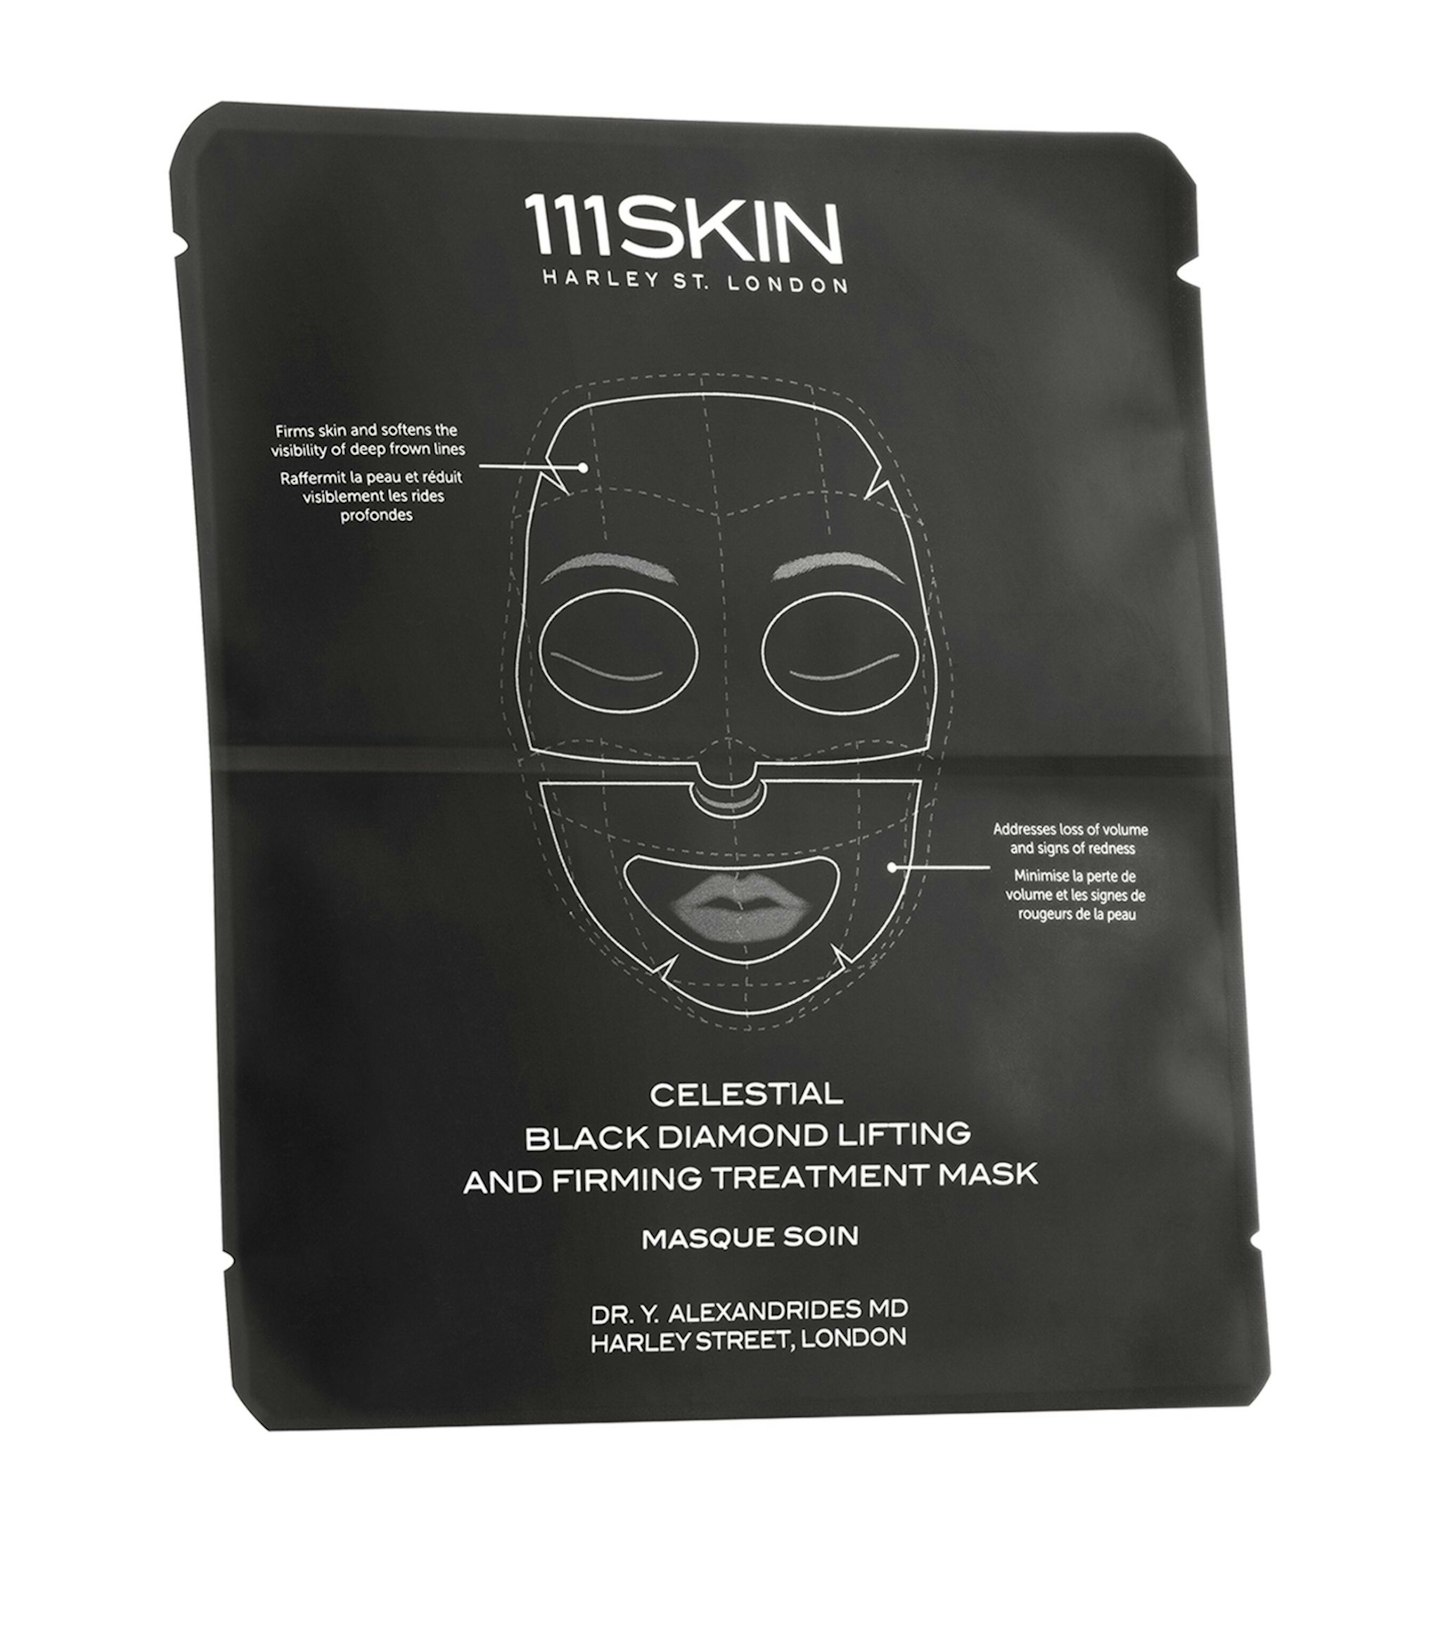 111Skin Celestial Black Diamond Lifting And Firming Treatment Mask Single